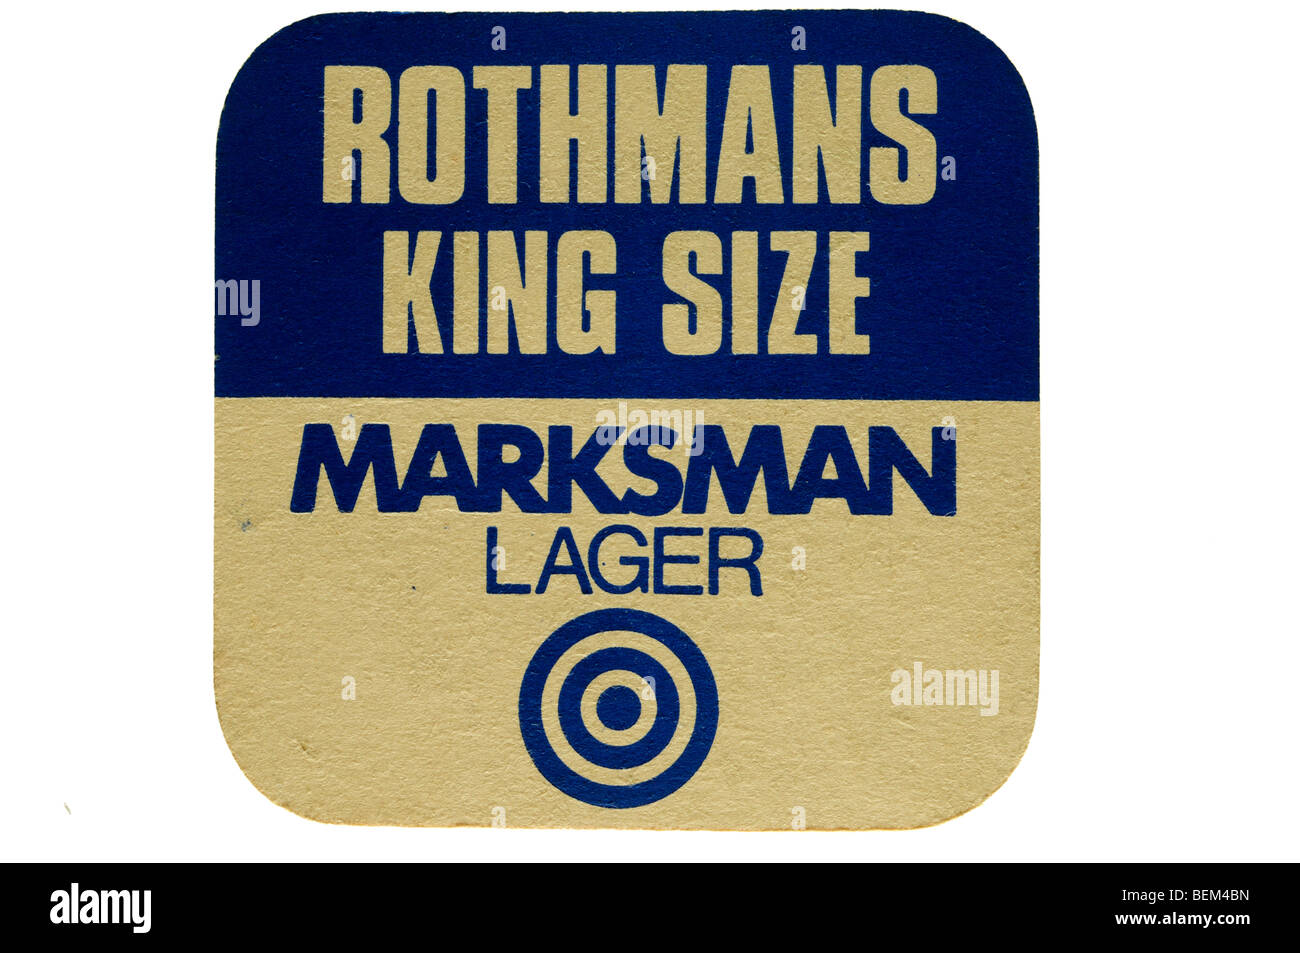 rothmans king size marksman lager Stock Photo